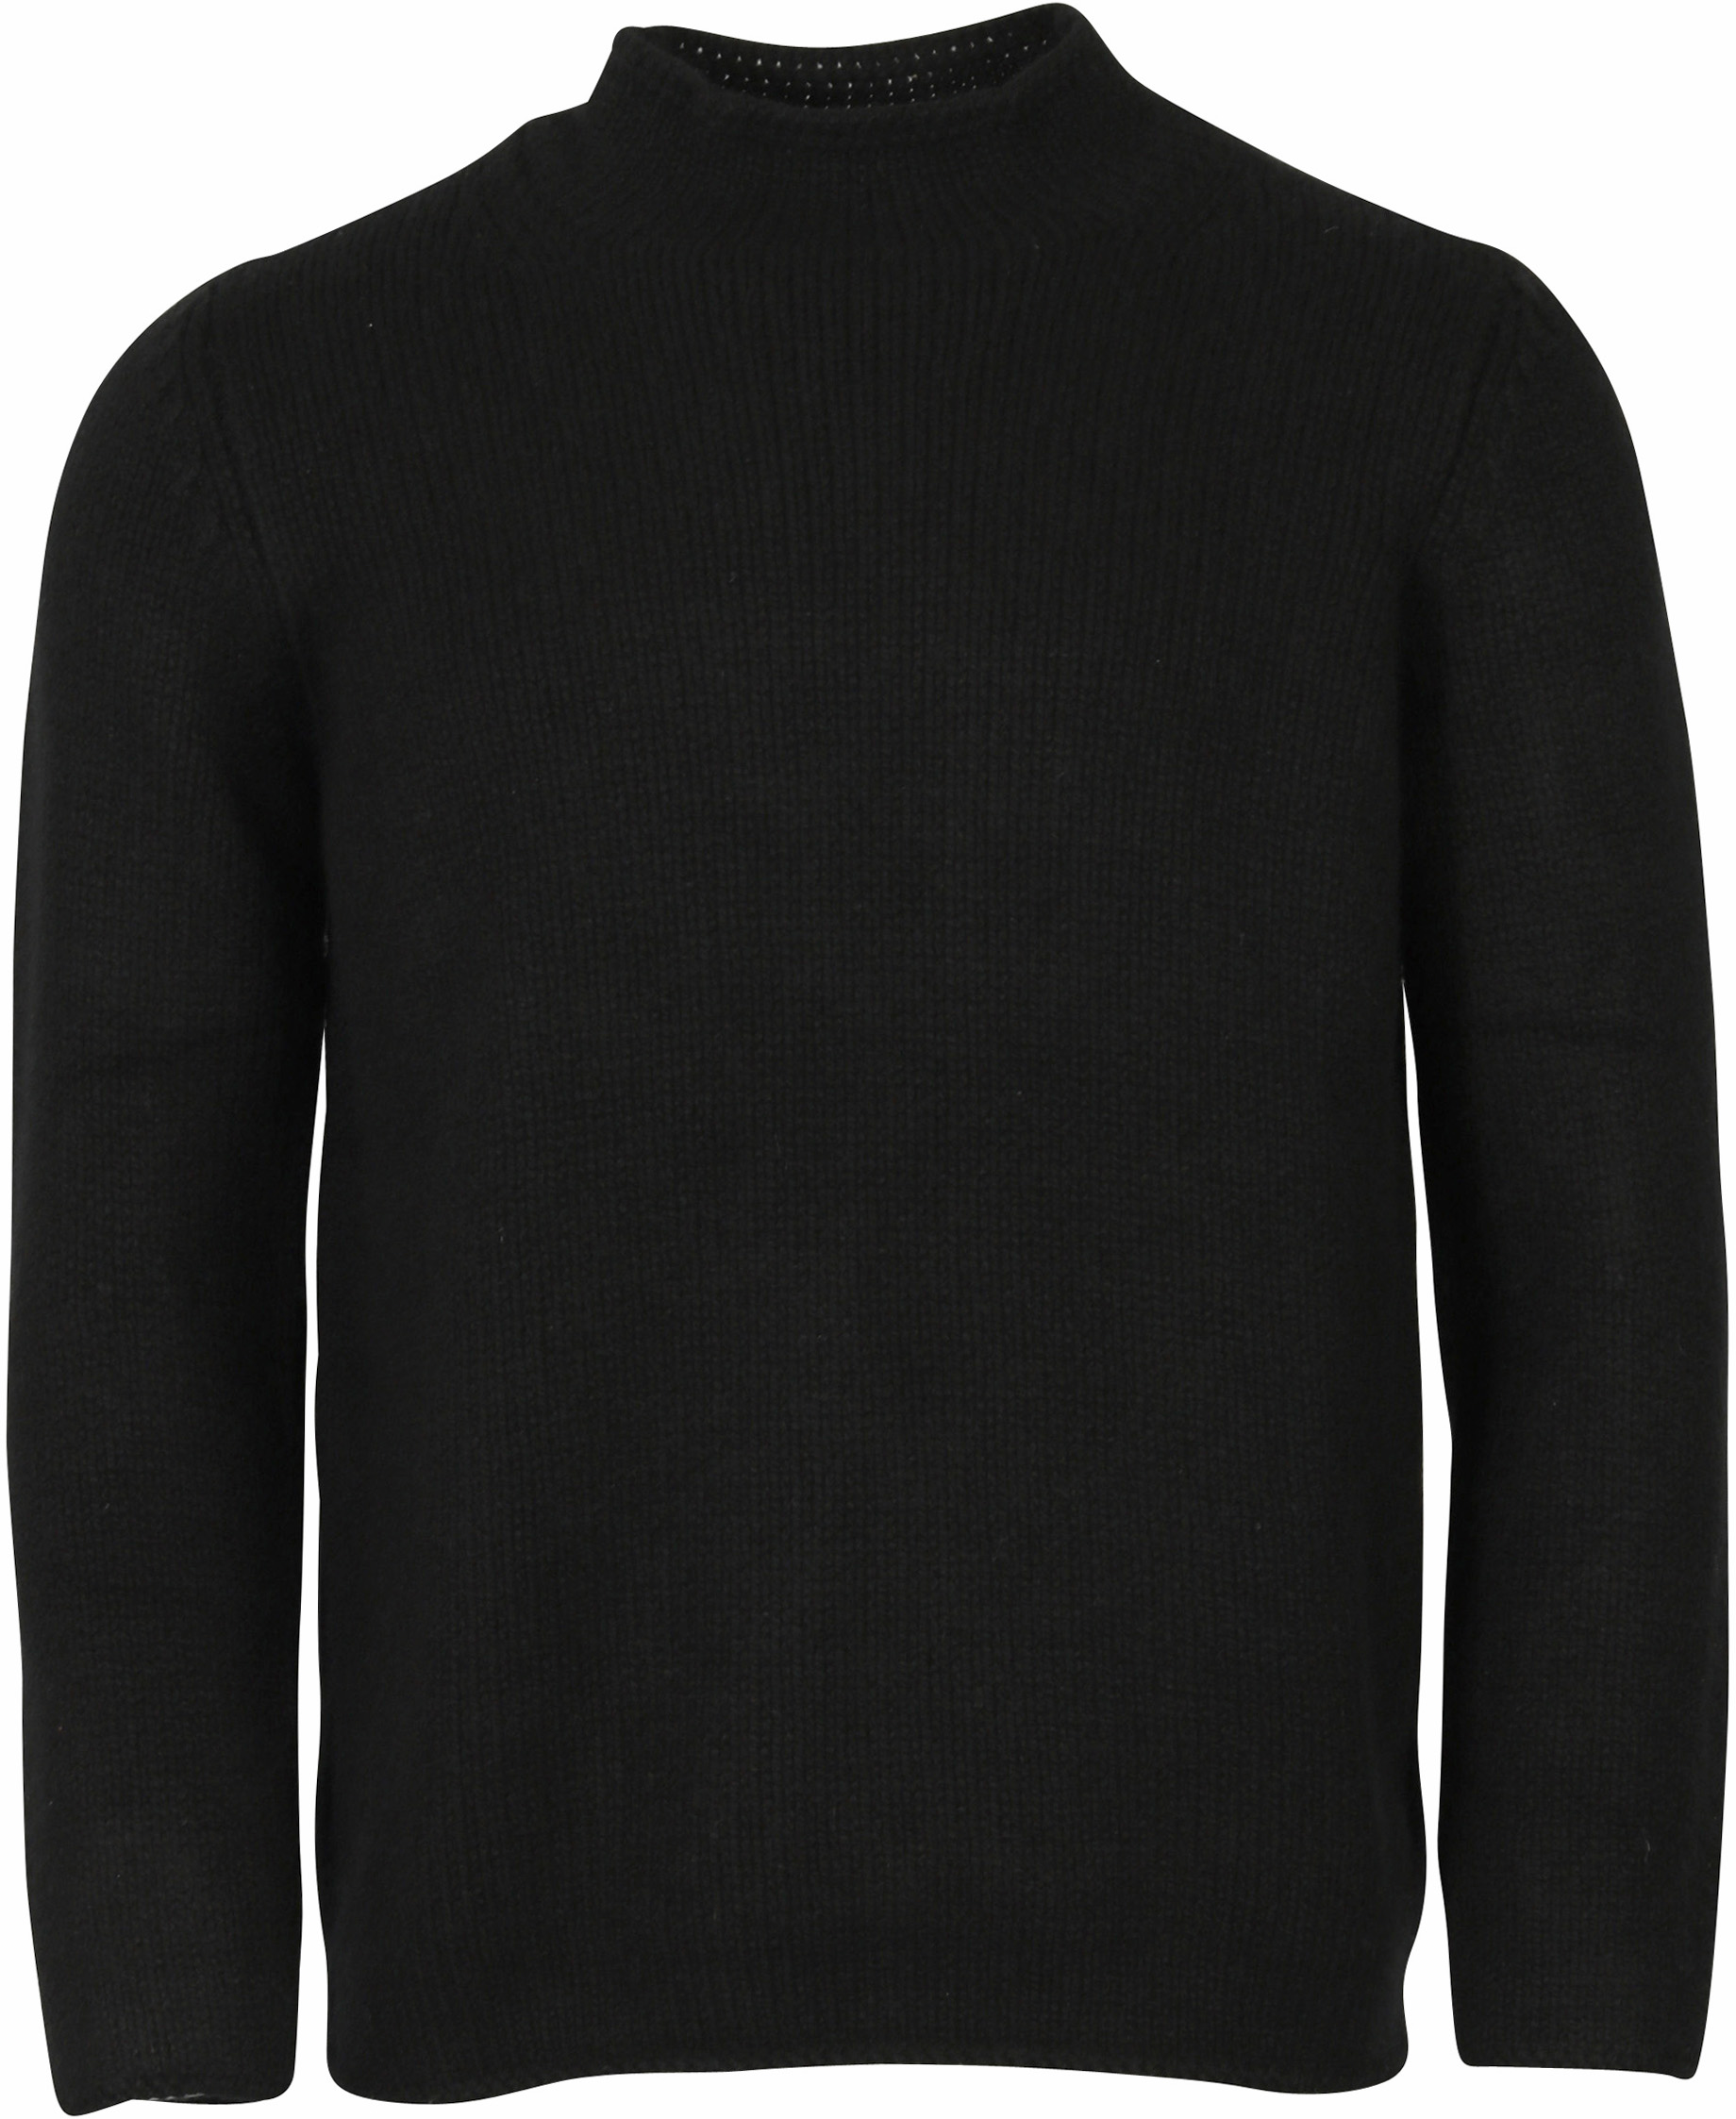 AIDA BARNI Cashmere Turtle Neck Sweater Black